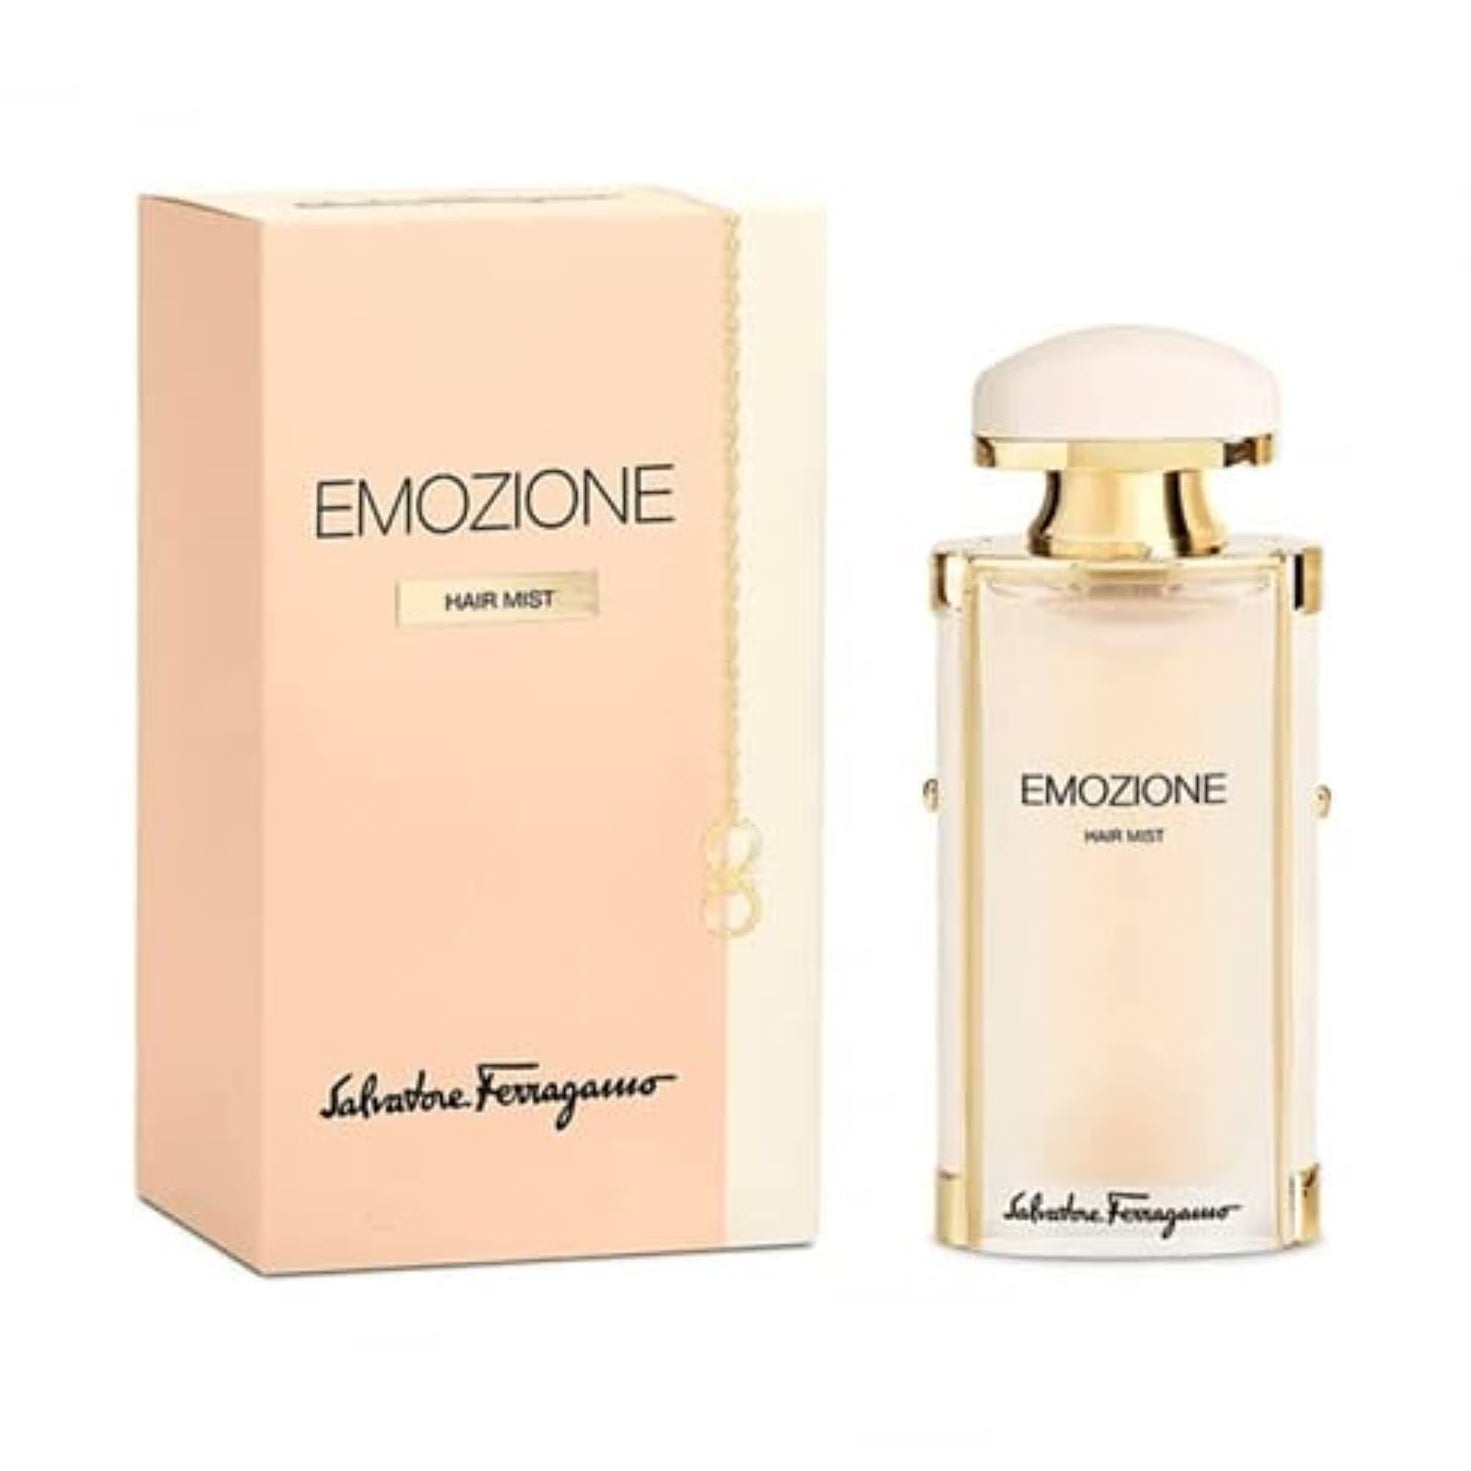 Salvatore Ferragamo Emozione Hair Mist | My Perfume Shop Australia